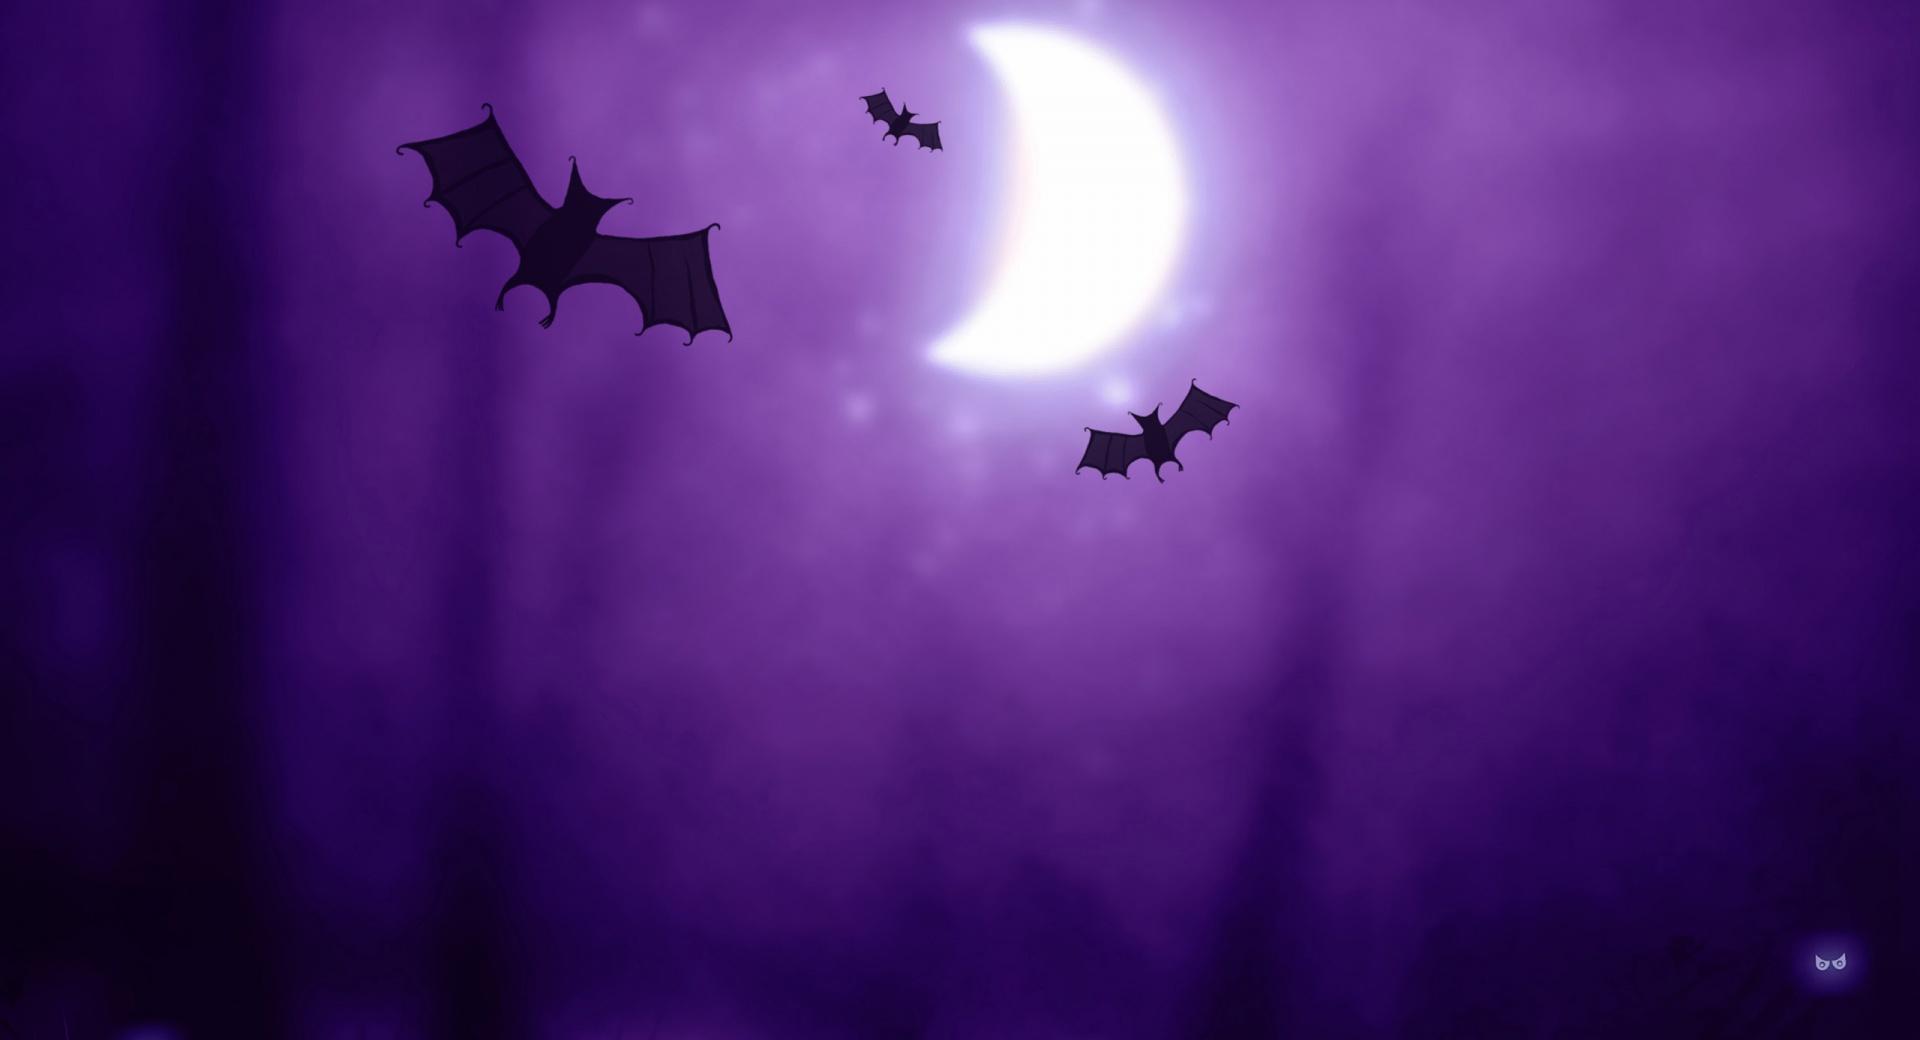 Bats  Halloween at 1024 x 1024 iPad size wallpapers HD quality